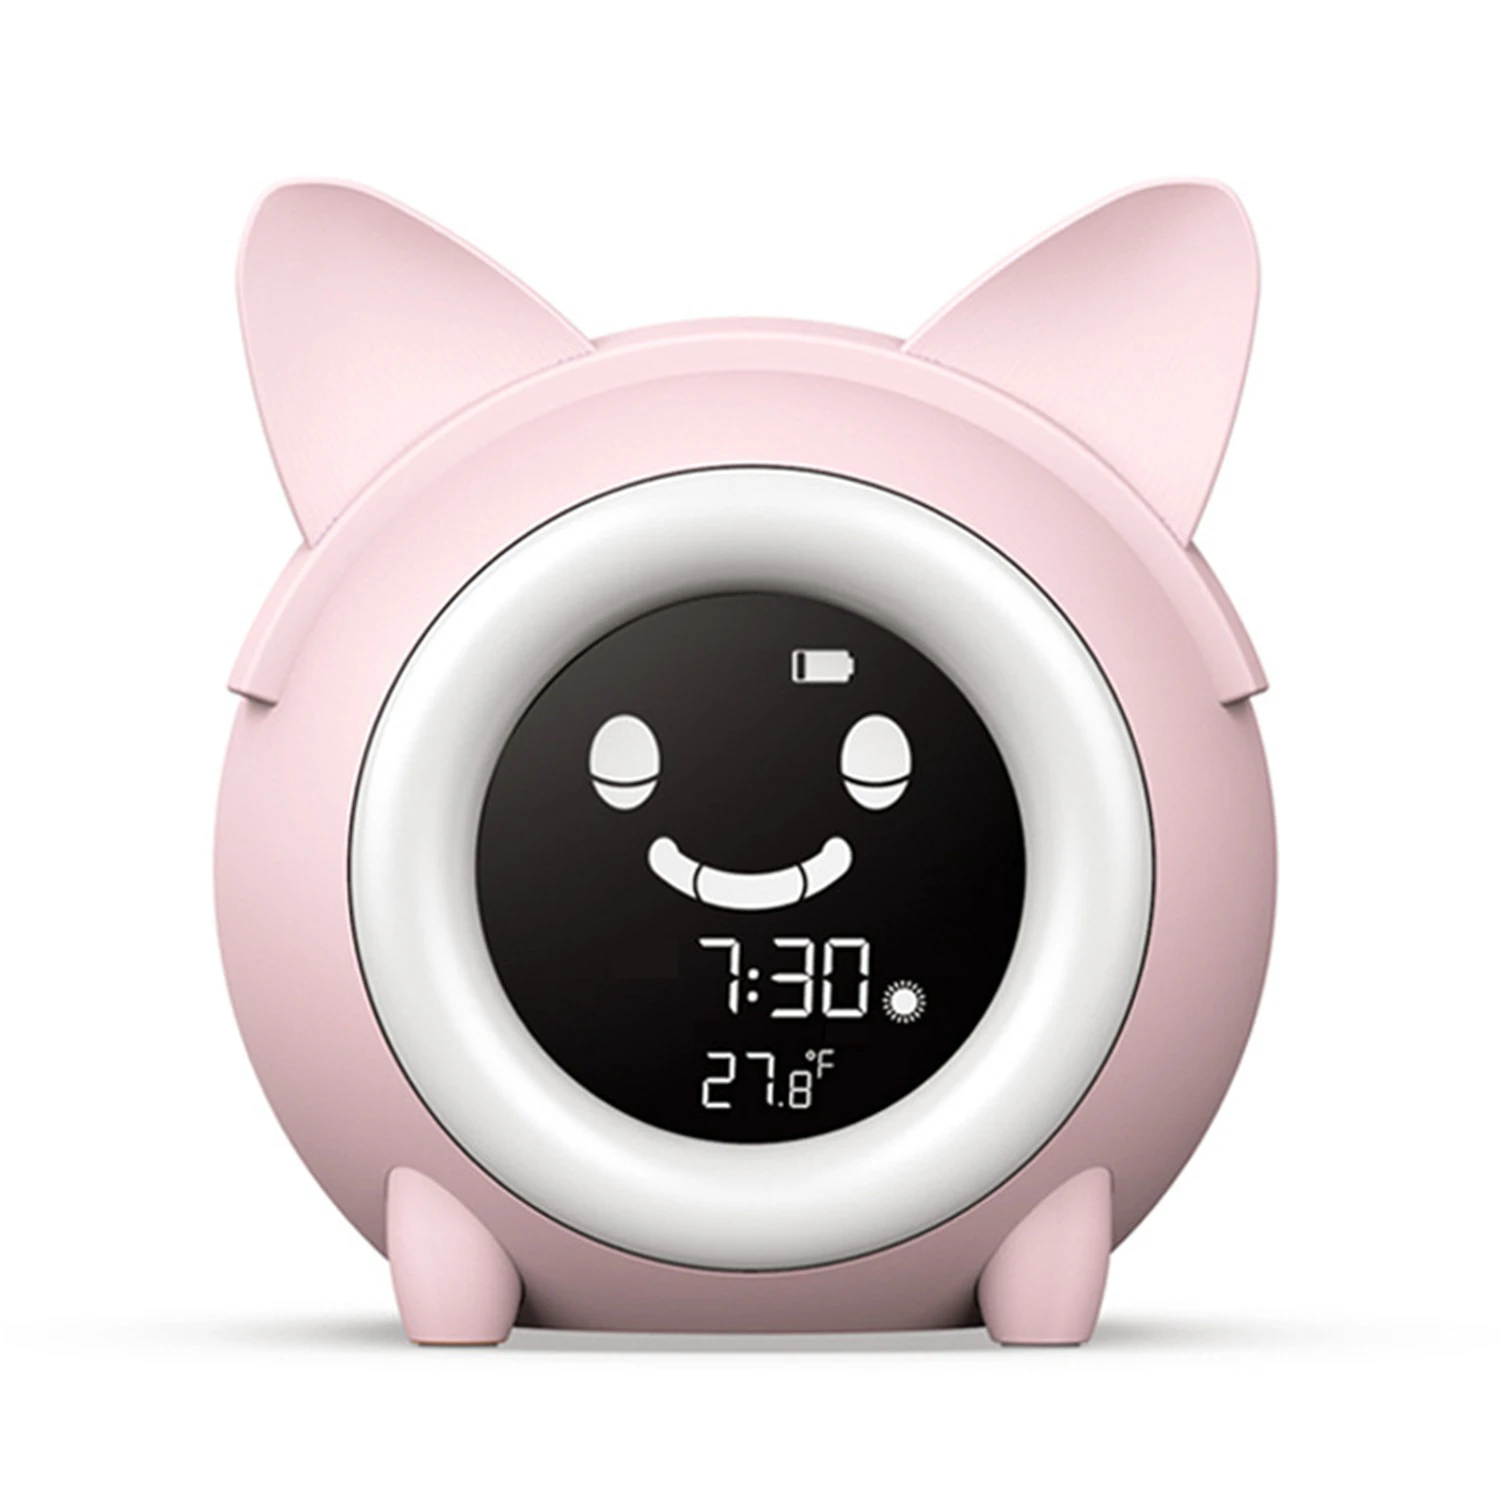 Manufacturer Recommended Smart Led Light Control 5 Color Changeable Quartz Analog Alarm Clock For Kids